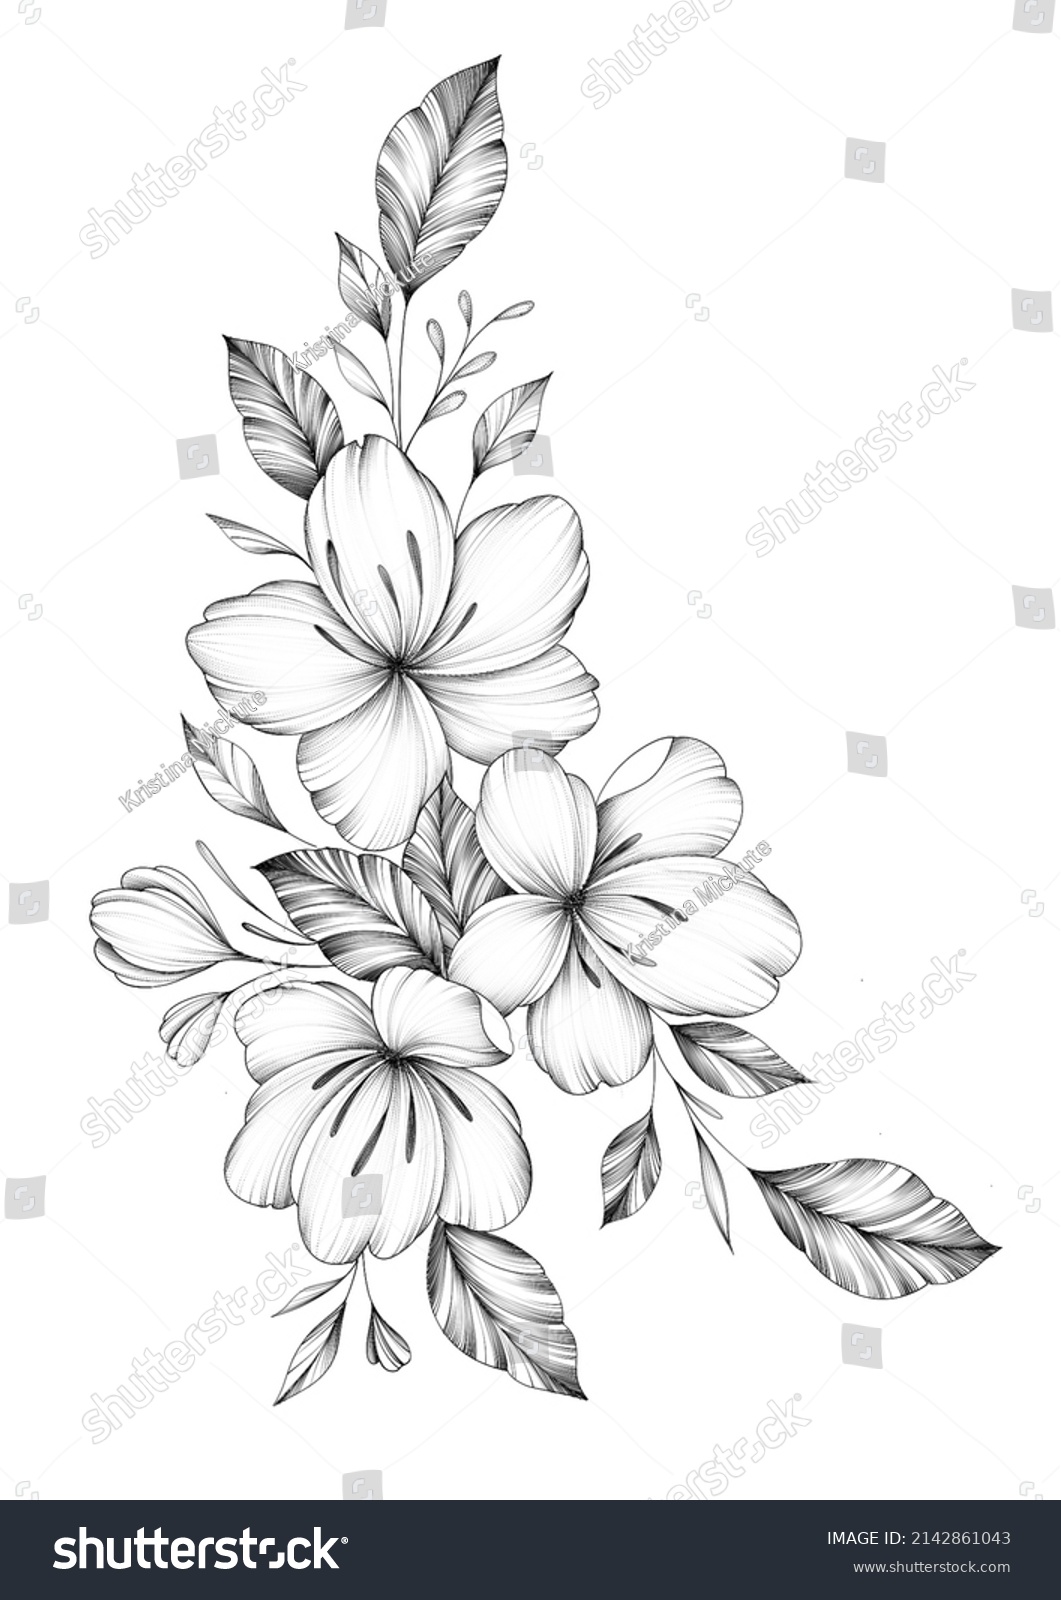 Cherry Blossom Flowers Illustration Tattoo Sketch Stock Illustration ...